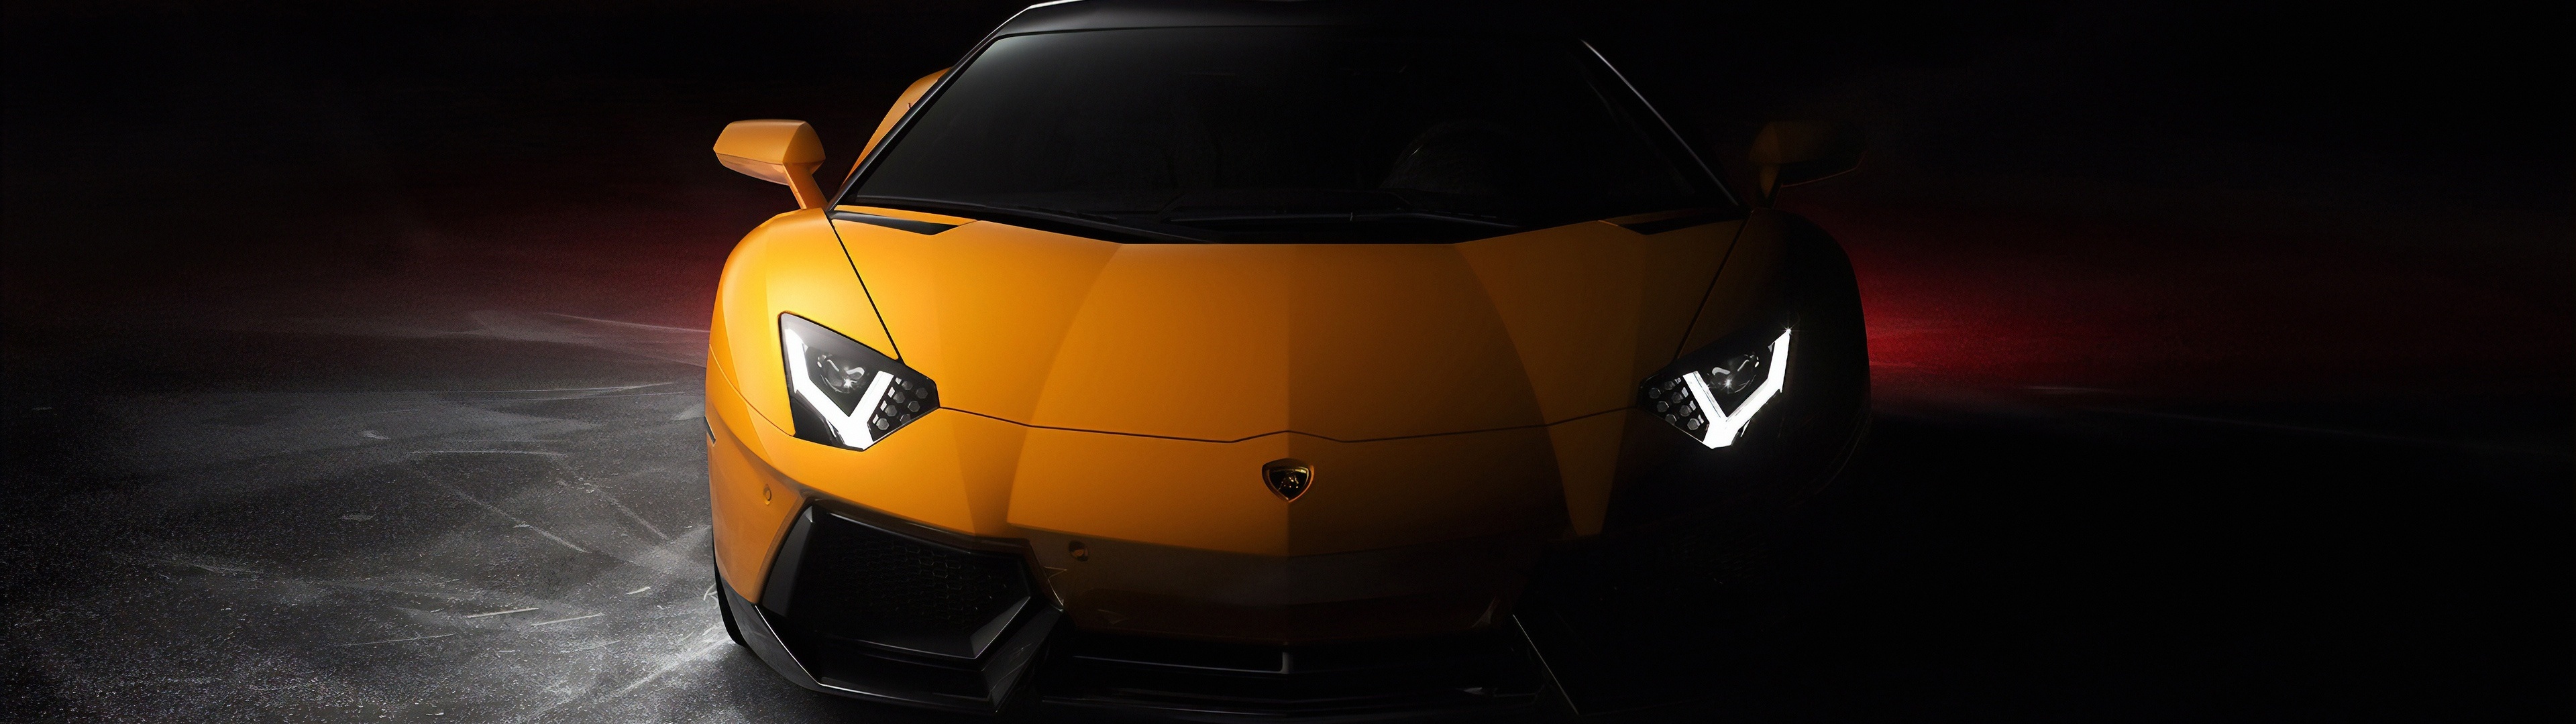 Lamborghini Aventador, 4K wallpaper, Sports cars, Sleek black background, 3840x1080 Dual Screen Desktop